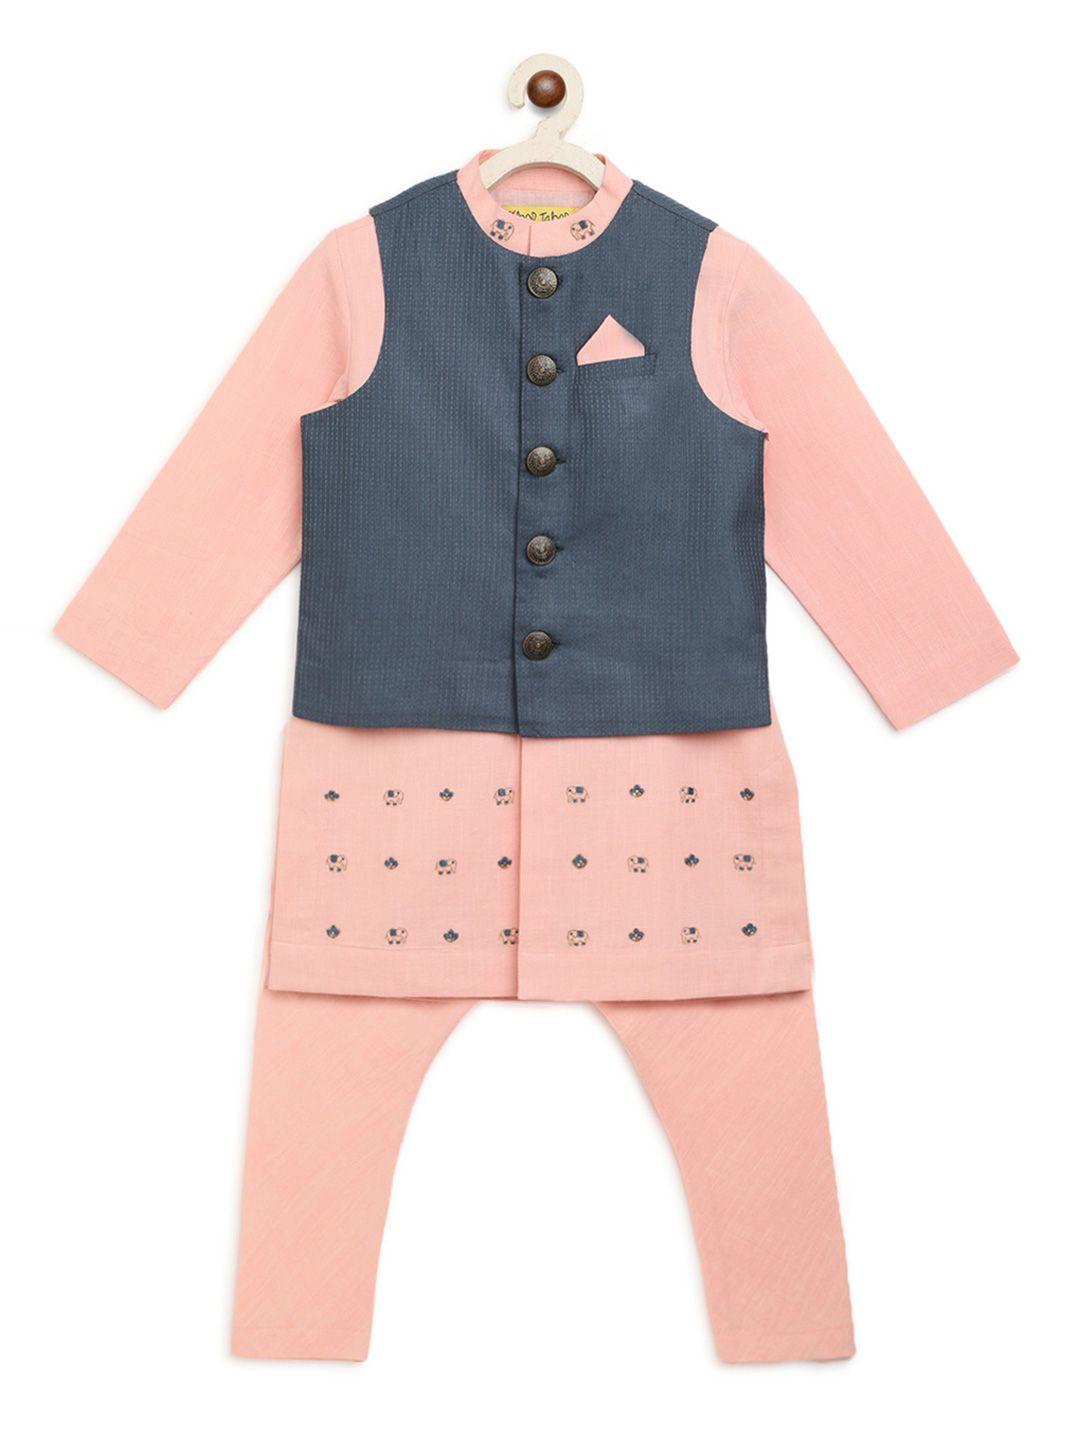 Tiber Taber Boys Pink & Navy Blue Embroidered Kurta Set with Jacket